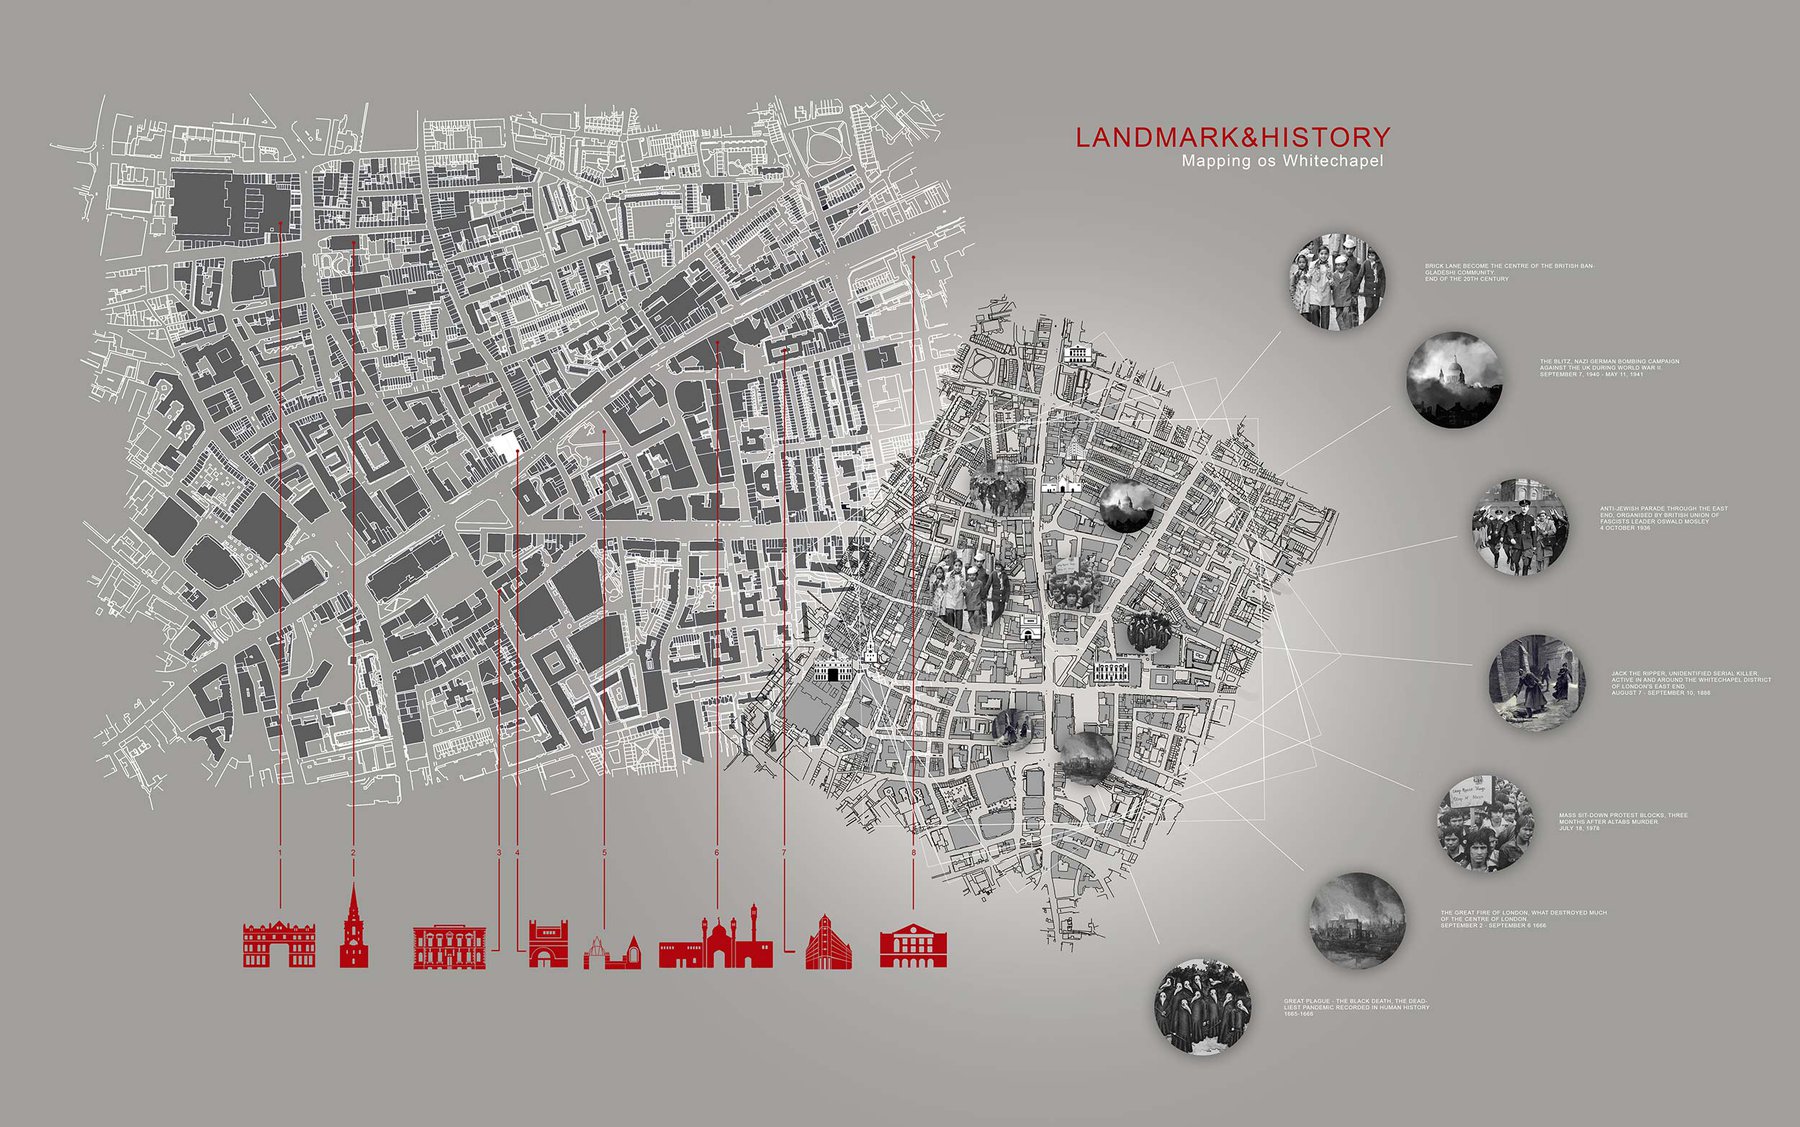 Mapping showing key landmarks in the Whitechapel area